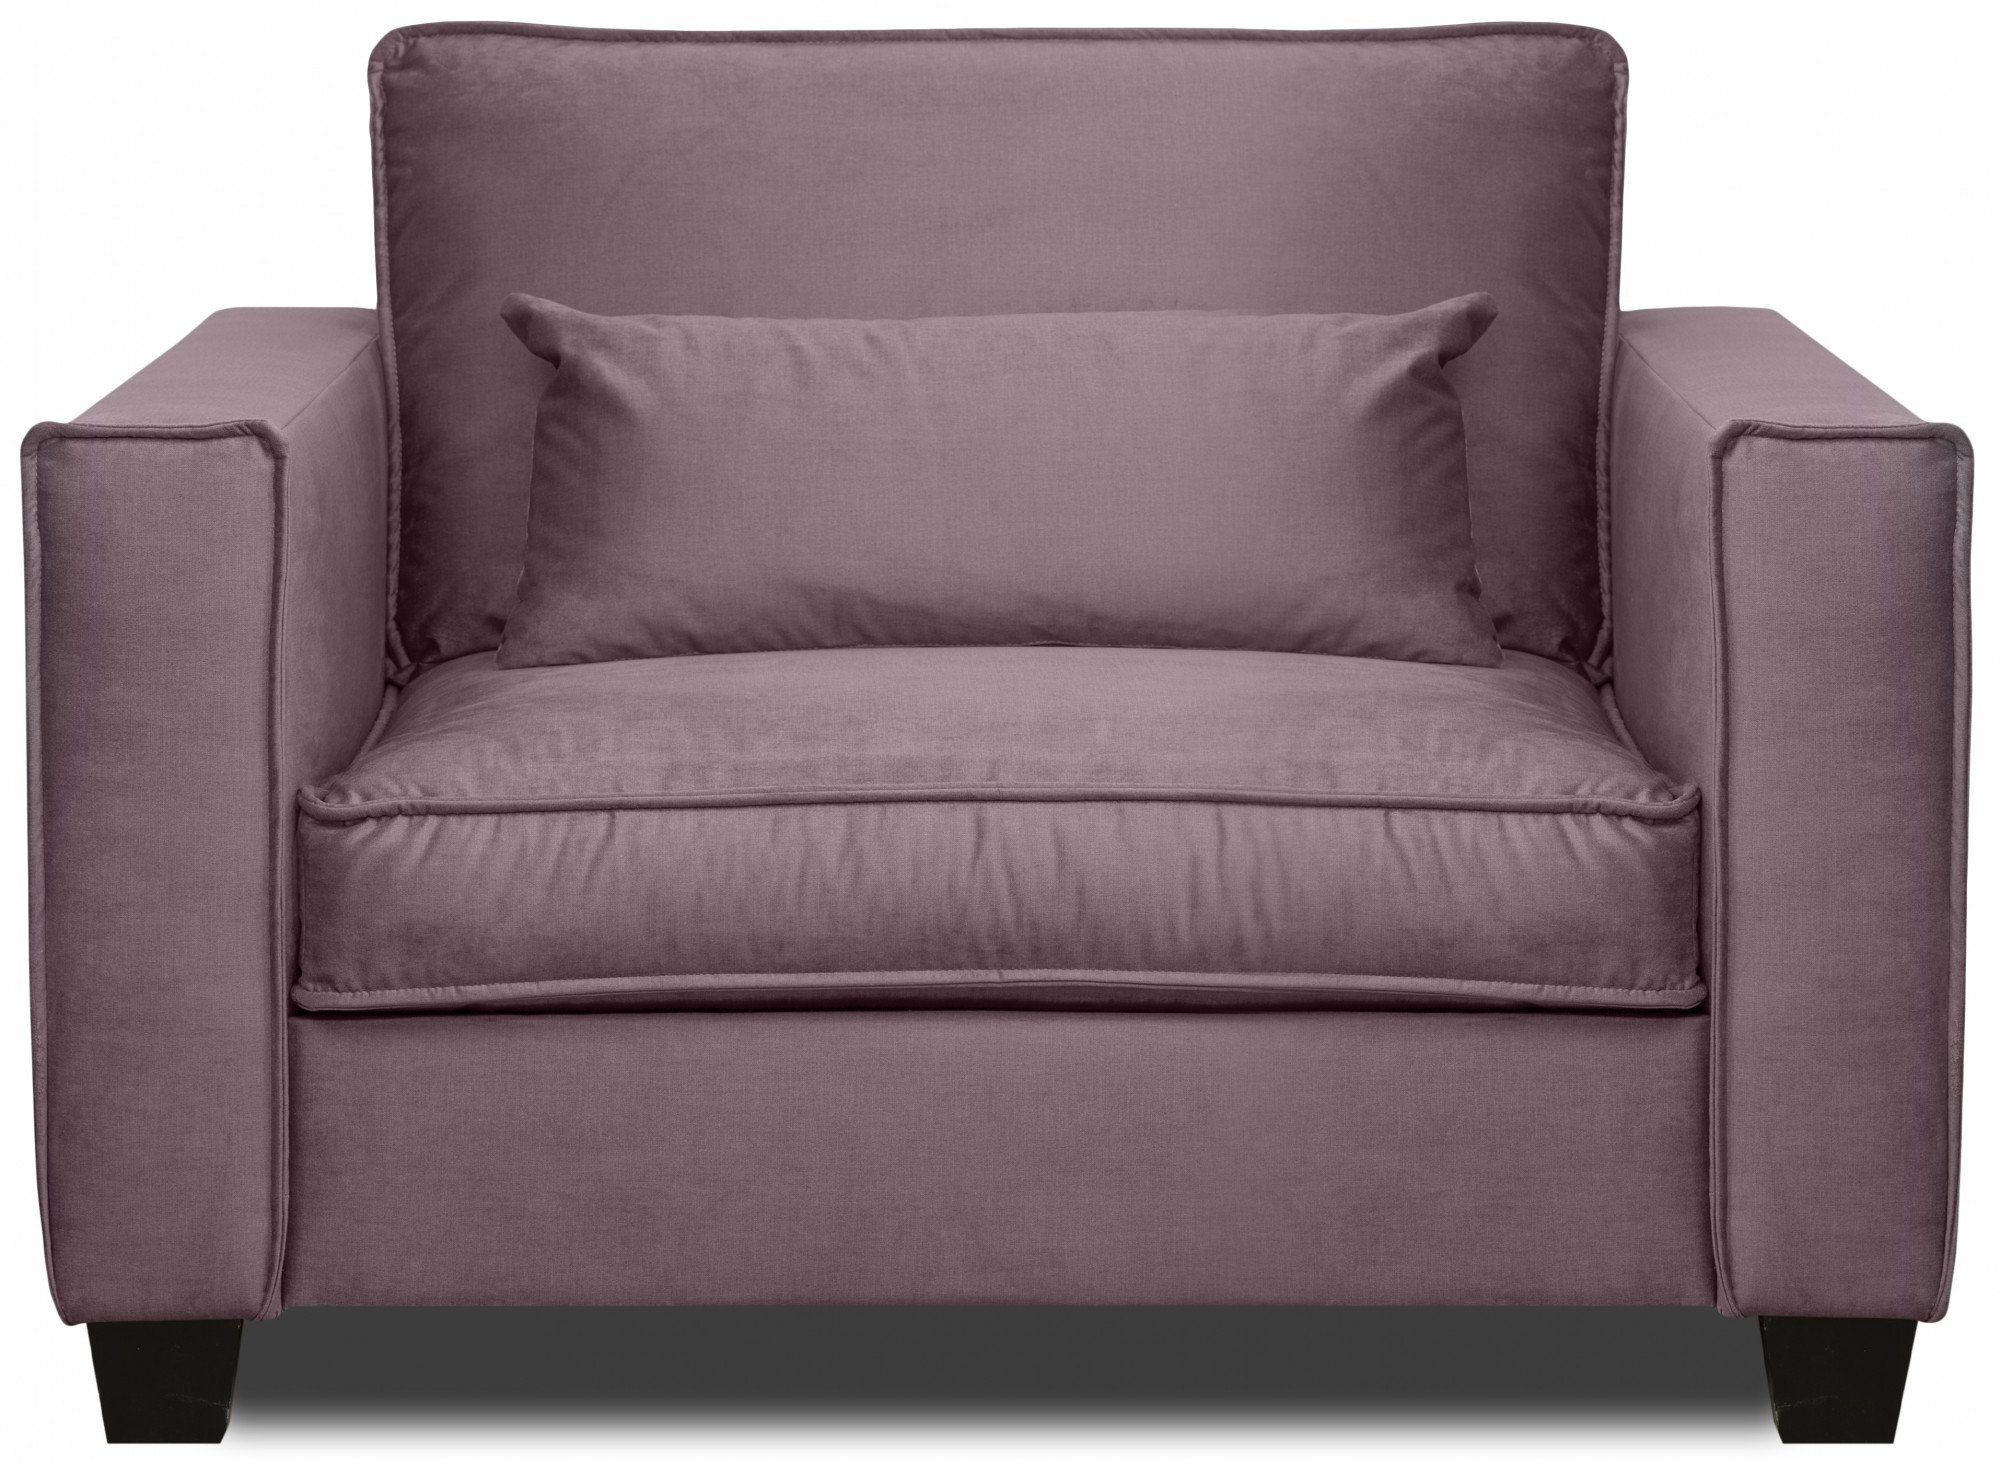 verfügbar Sessel viele bequeme violet Sitzgelegenheiten, Tilques, Farben affaire Home pink